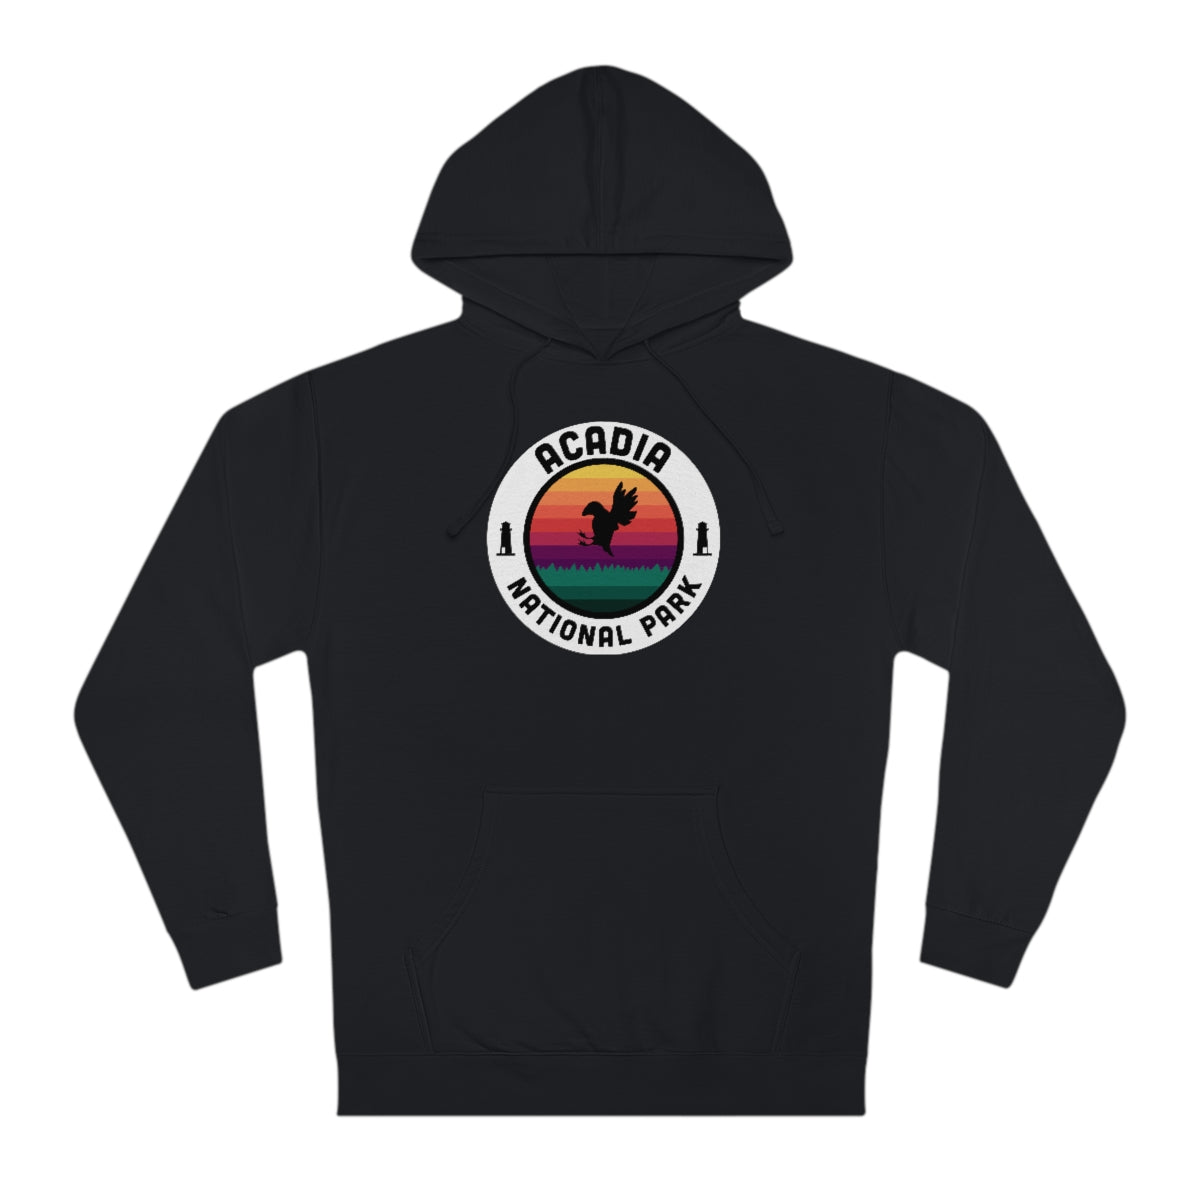 Acadia National Park Hoodie - Round Emblem Design